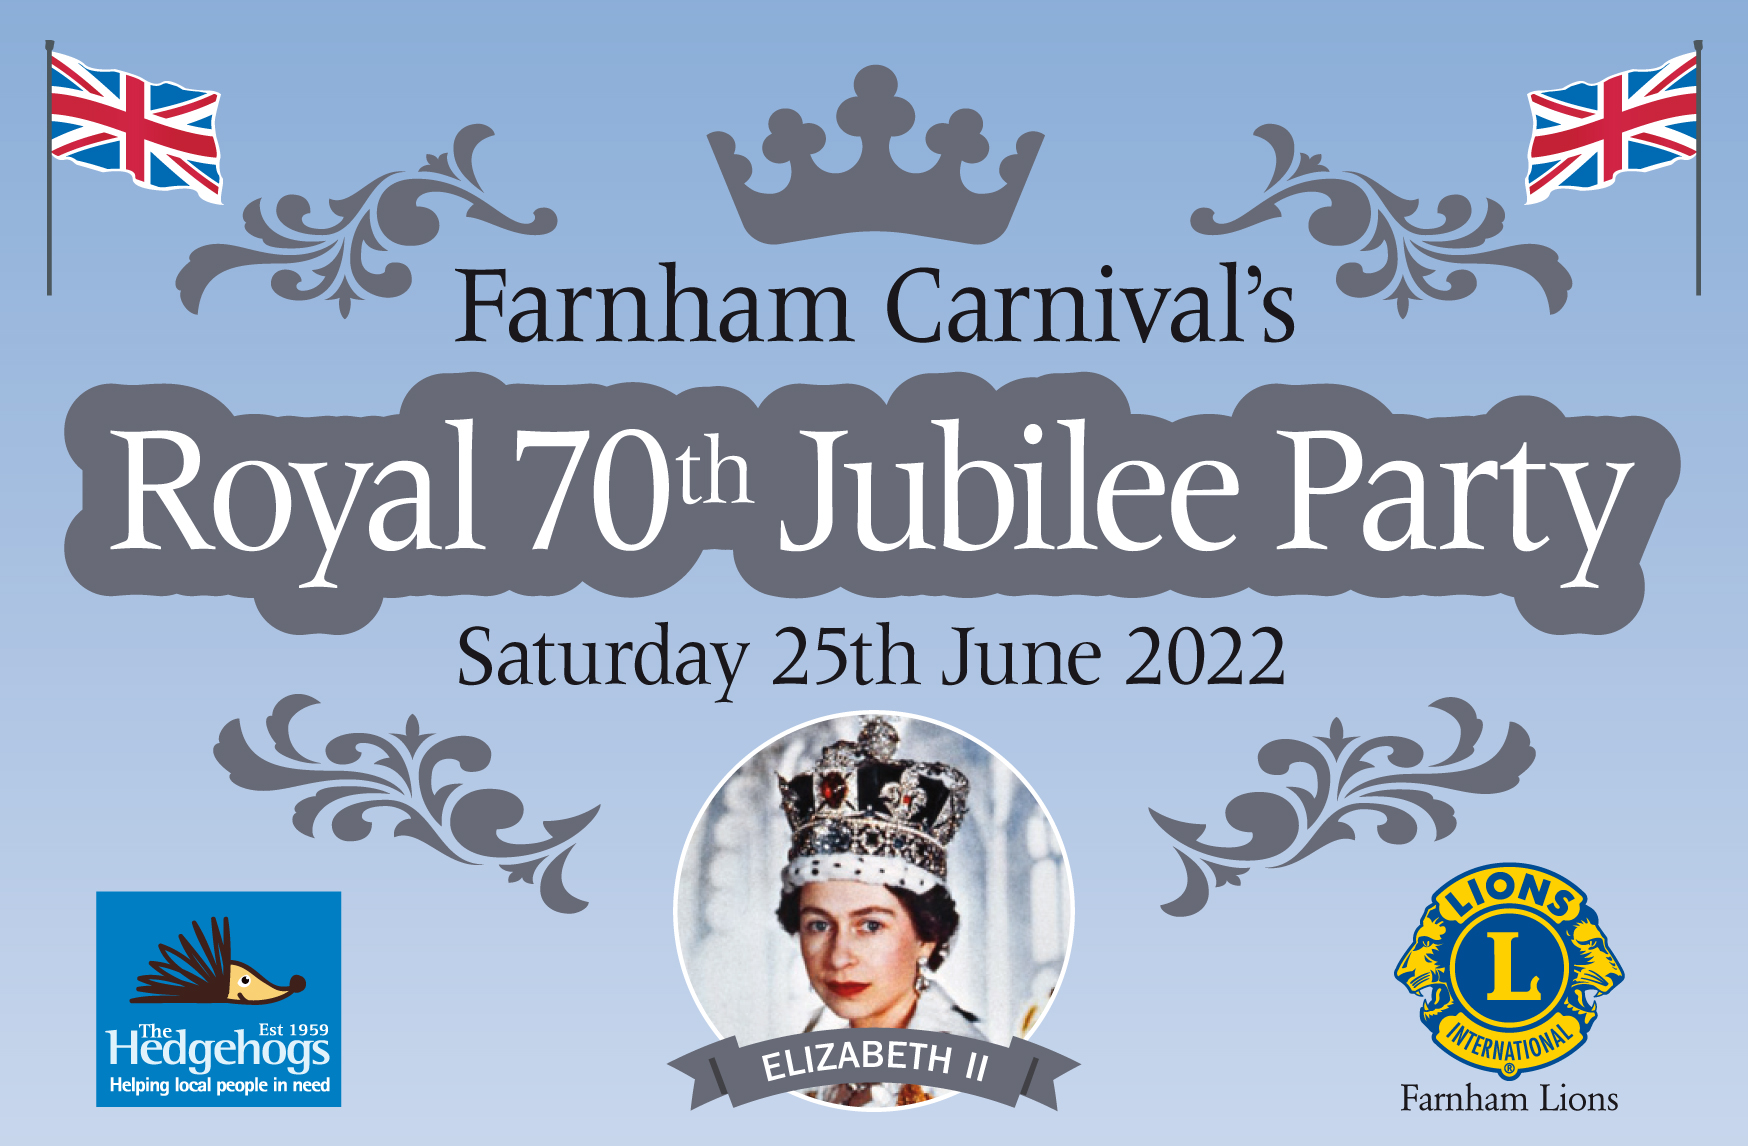 Farnham Carnival Royal Jubilee Party theme for 2022